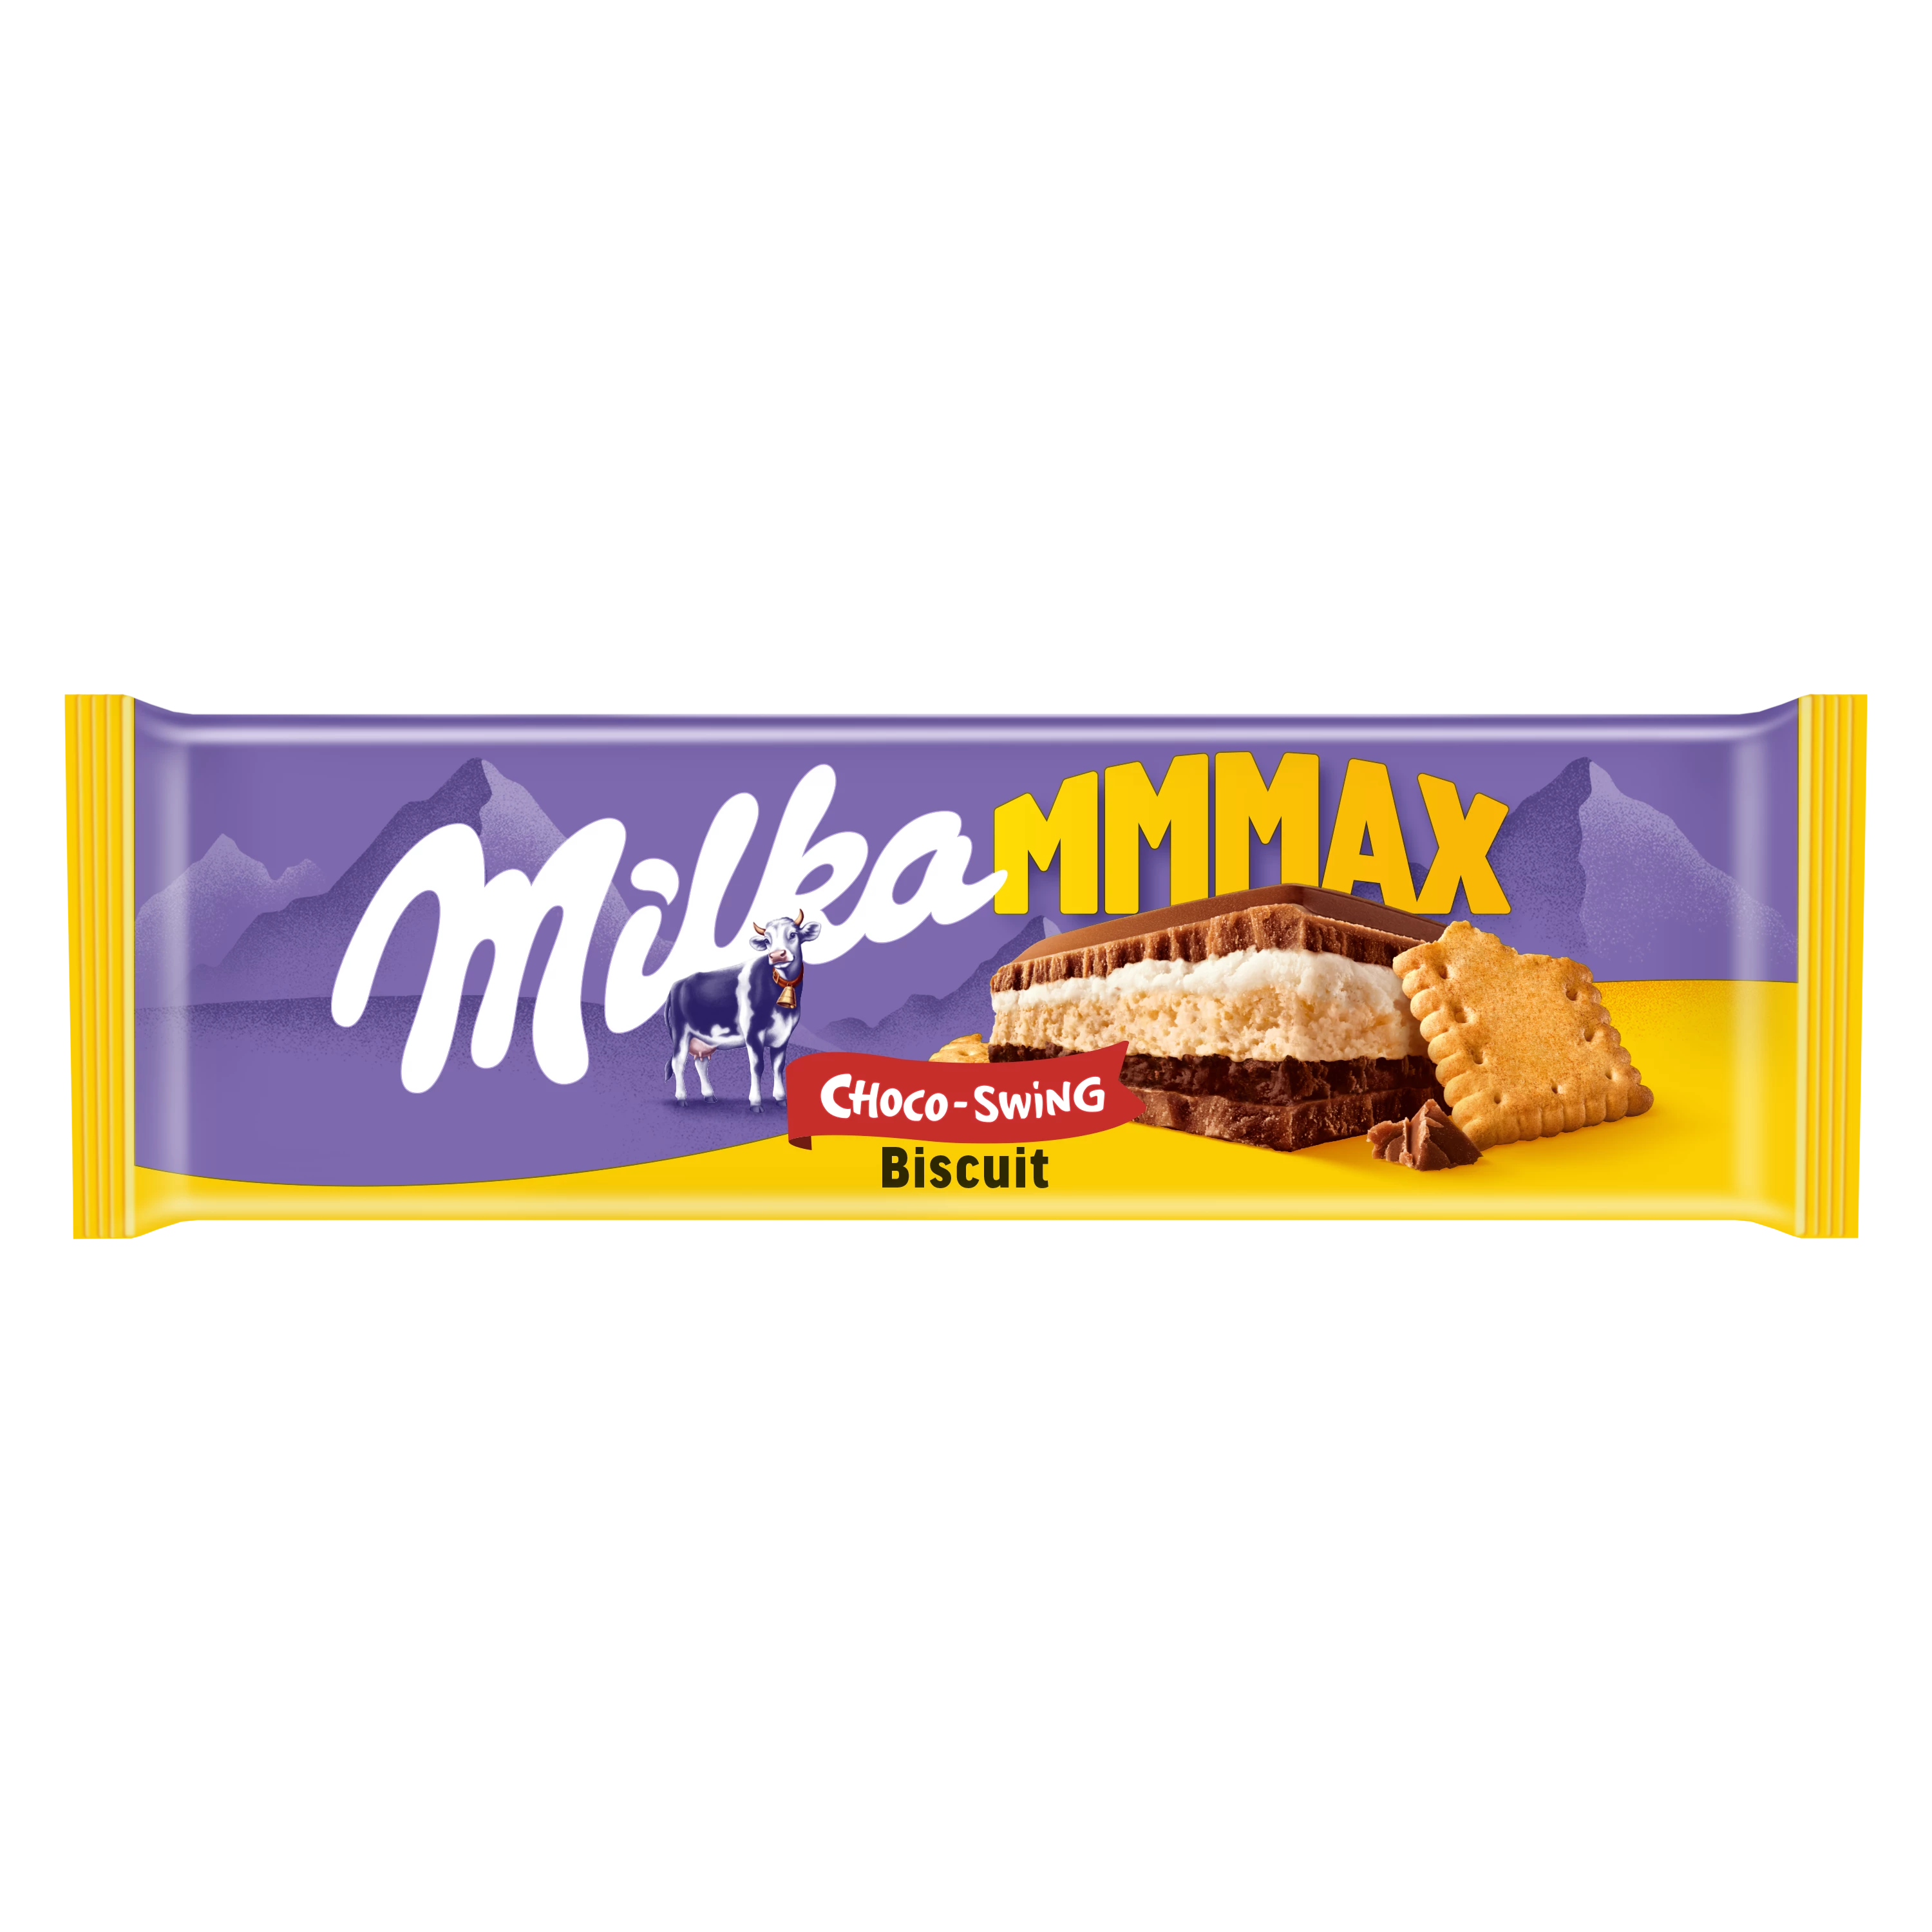 Biscoito choco-swing tablette Mmmax 300g - MILKA